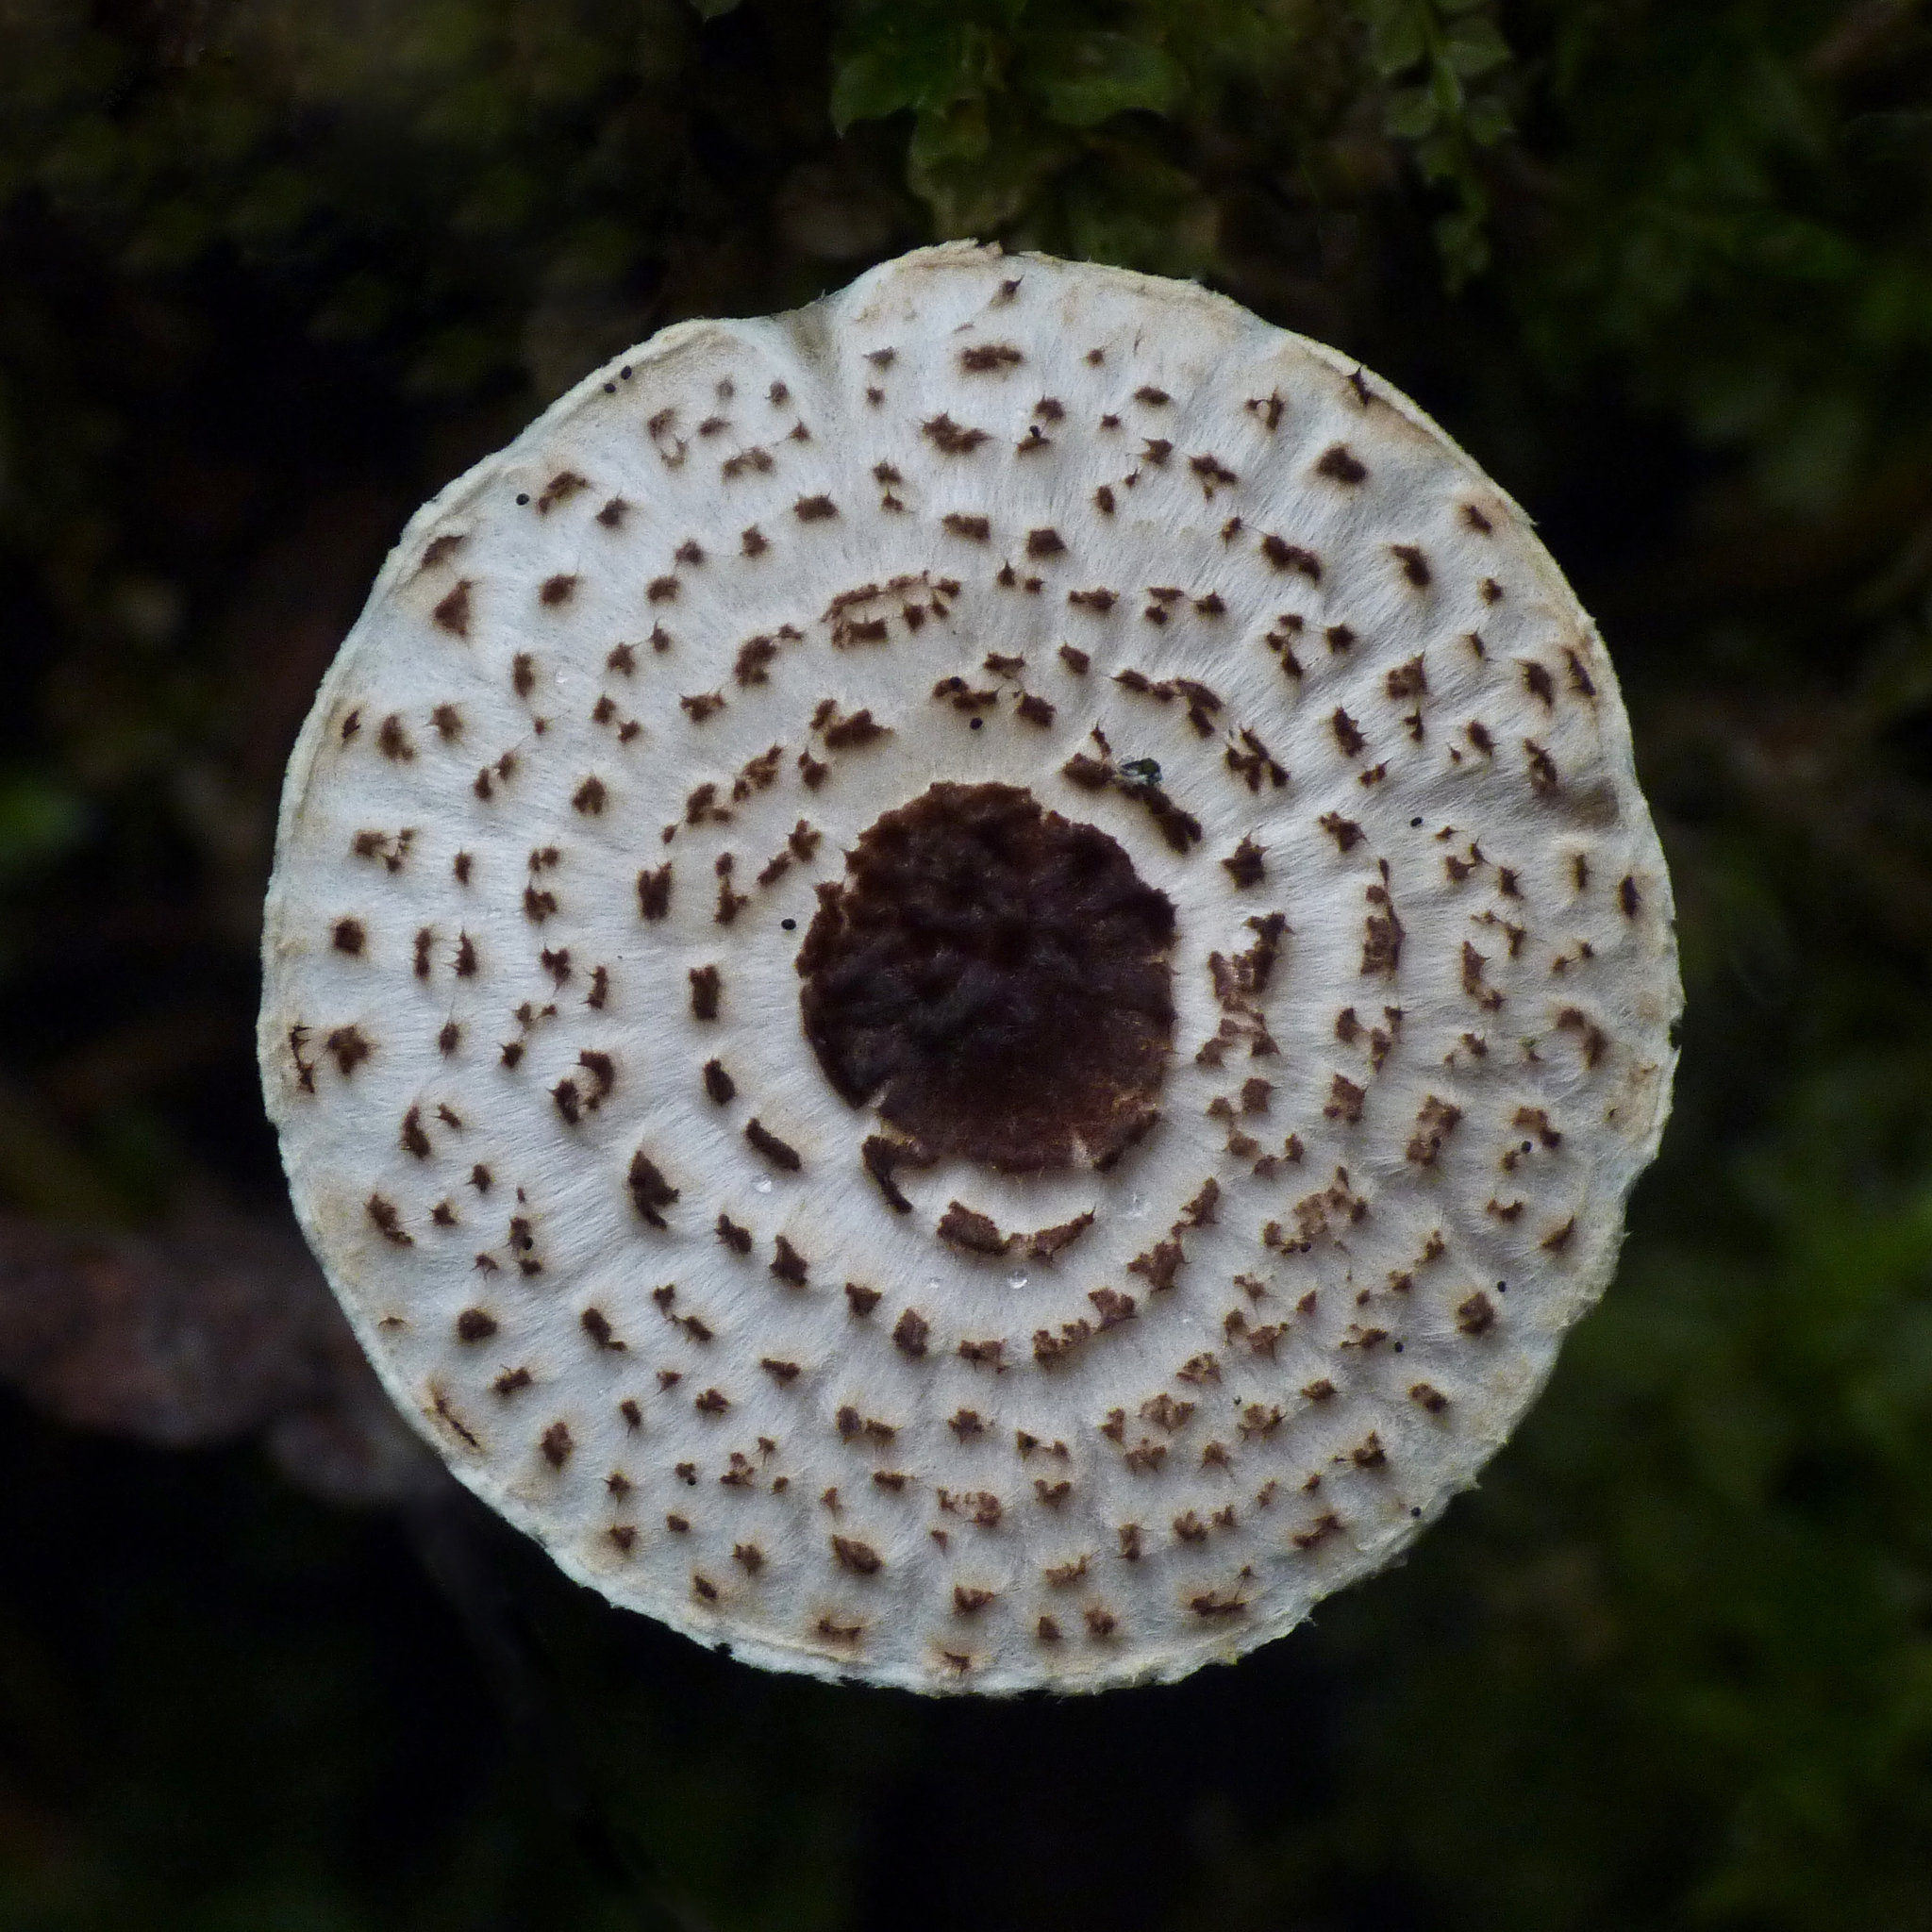 Mushroom abstract